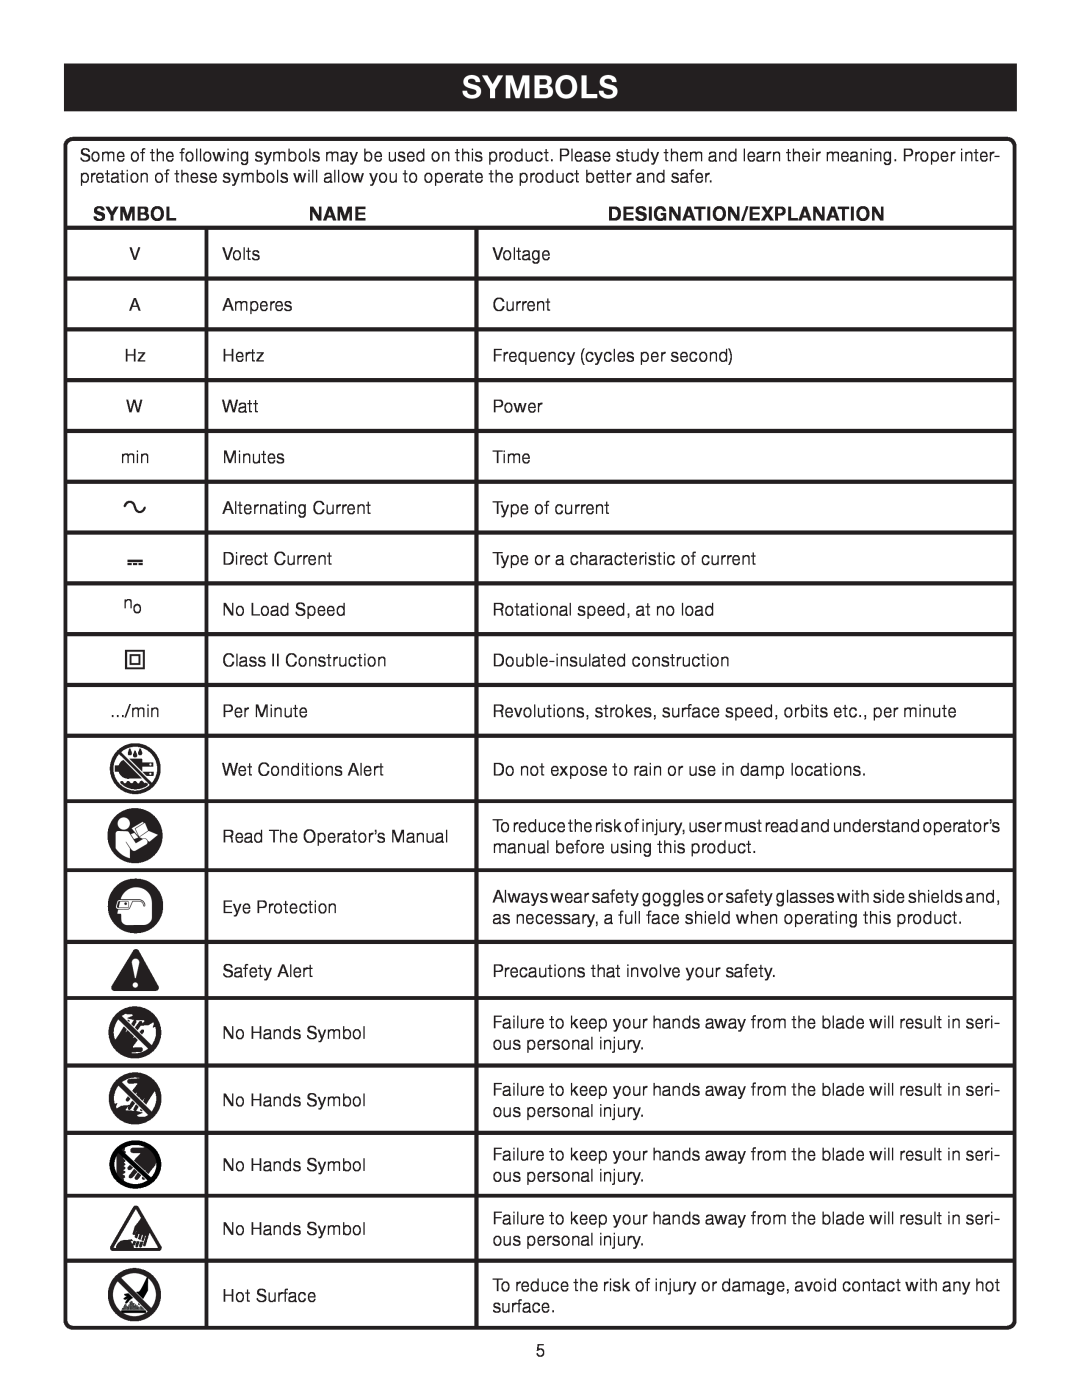 Ryobi P600 manual Symbols, Name, Designation/Explanation 